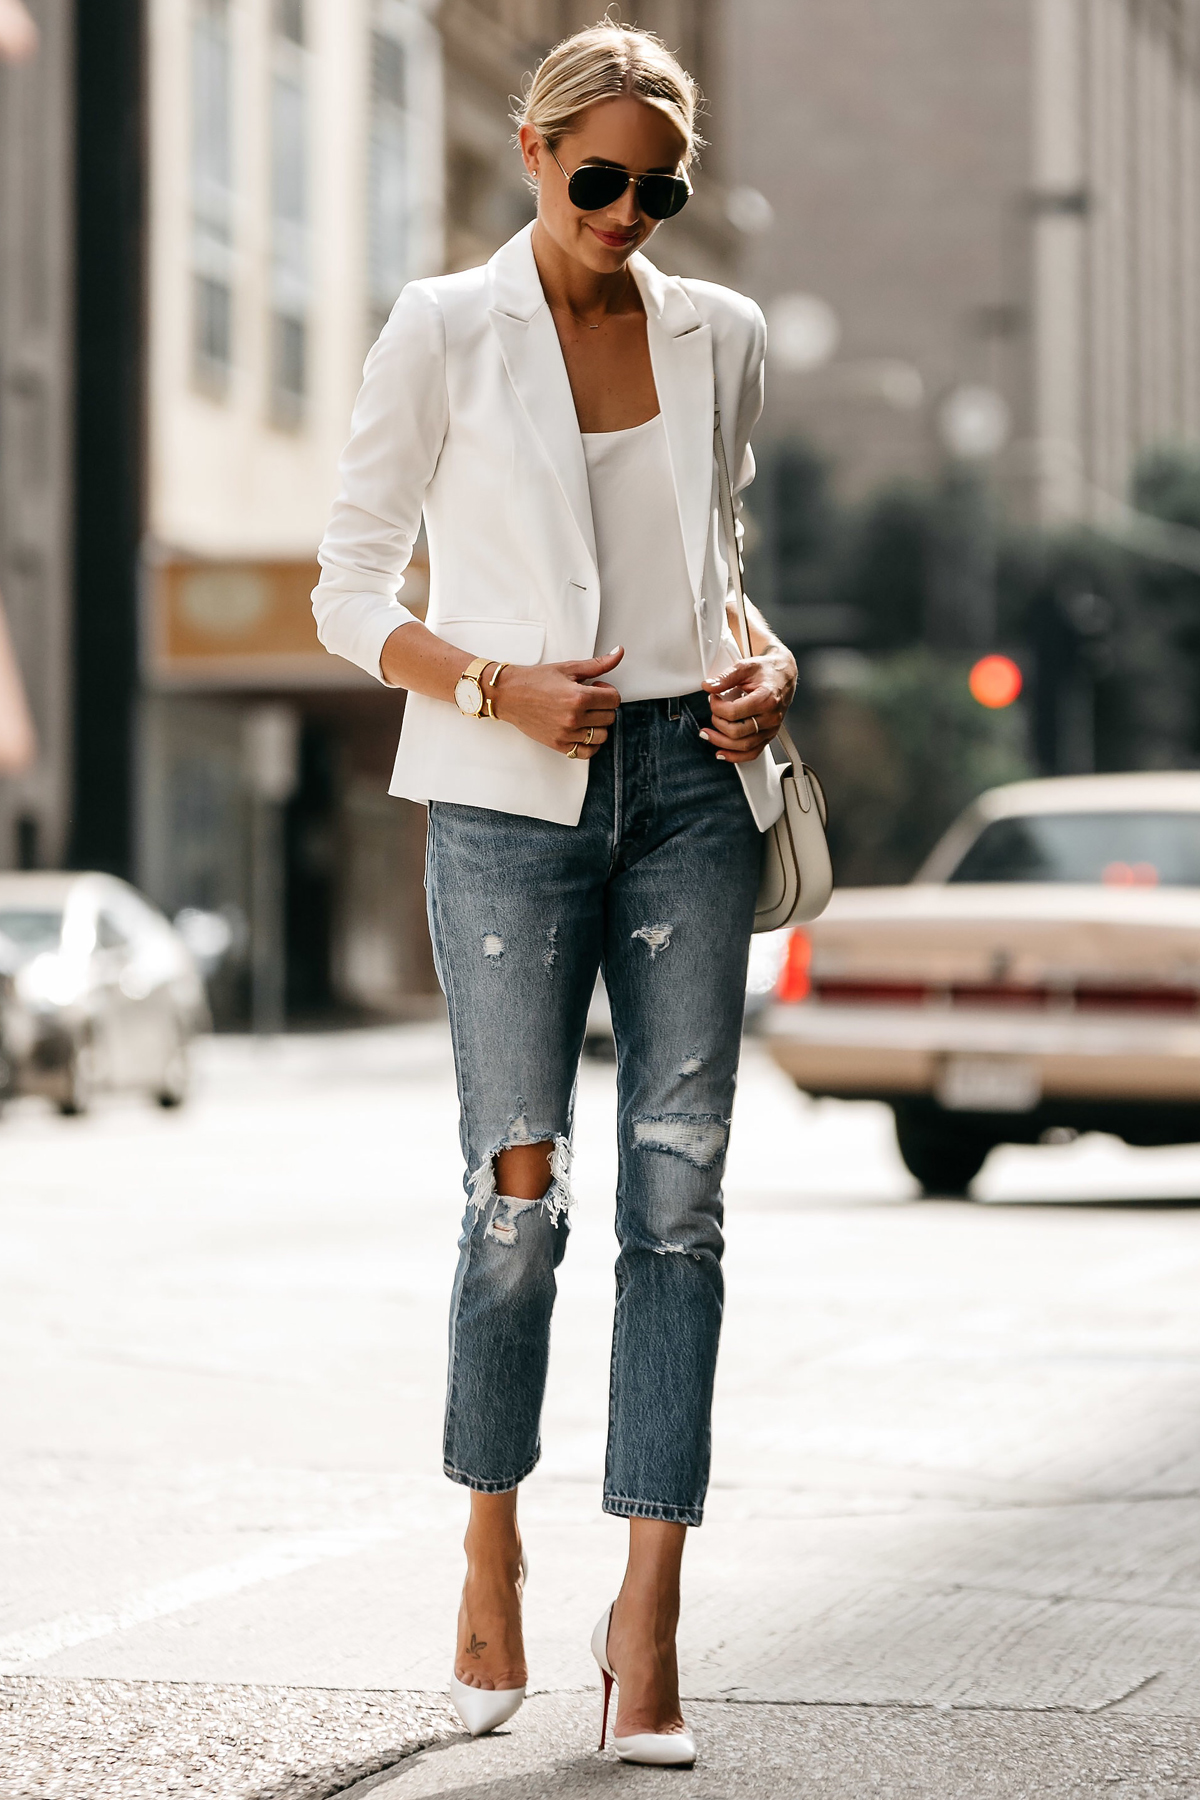 Fashion Jackson Blonde Woman Wearing White Blazer Distressed Jeans Outfit